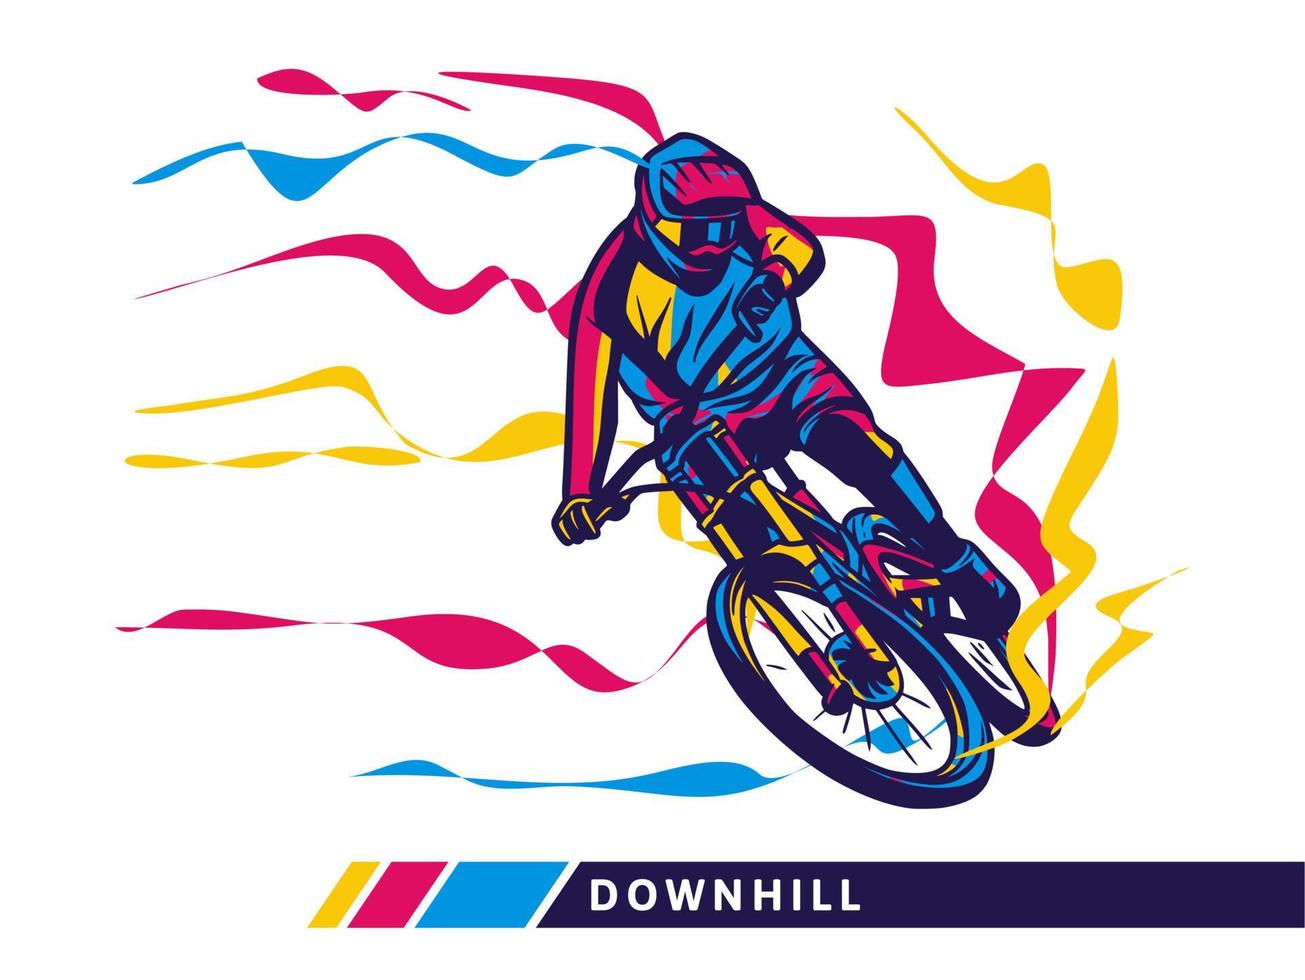 Downhill-Mountainbike-Bewegung bunte Kunstwerke Radfahrer-Bewegungsillustration vektor